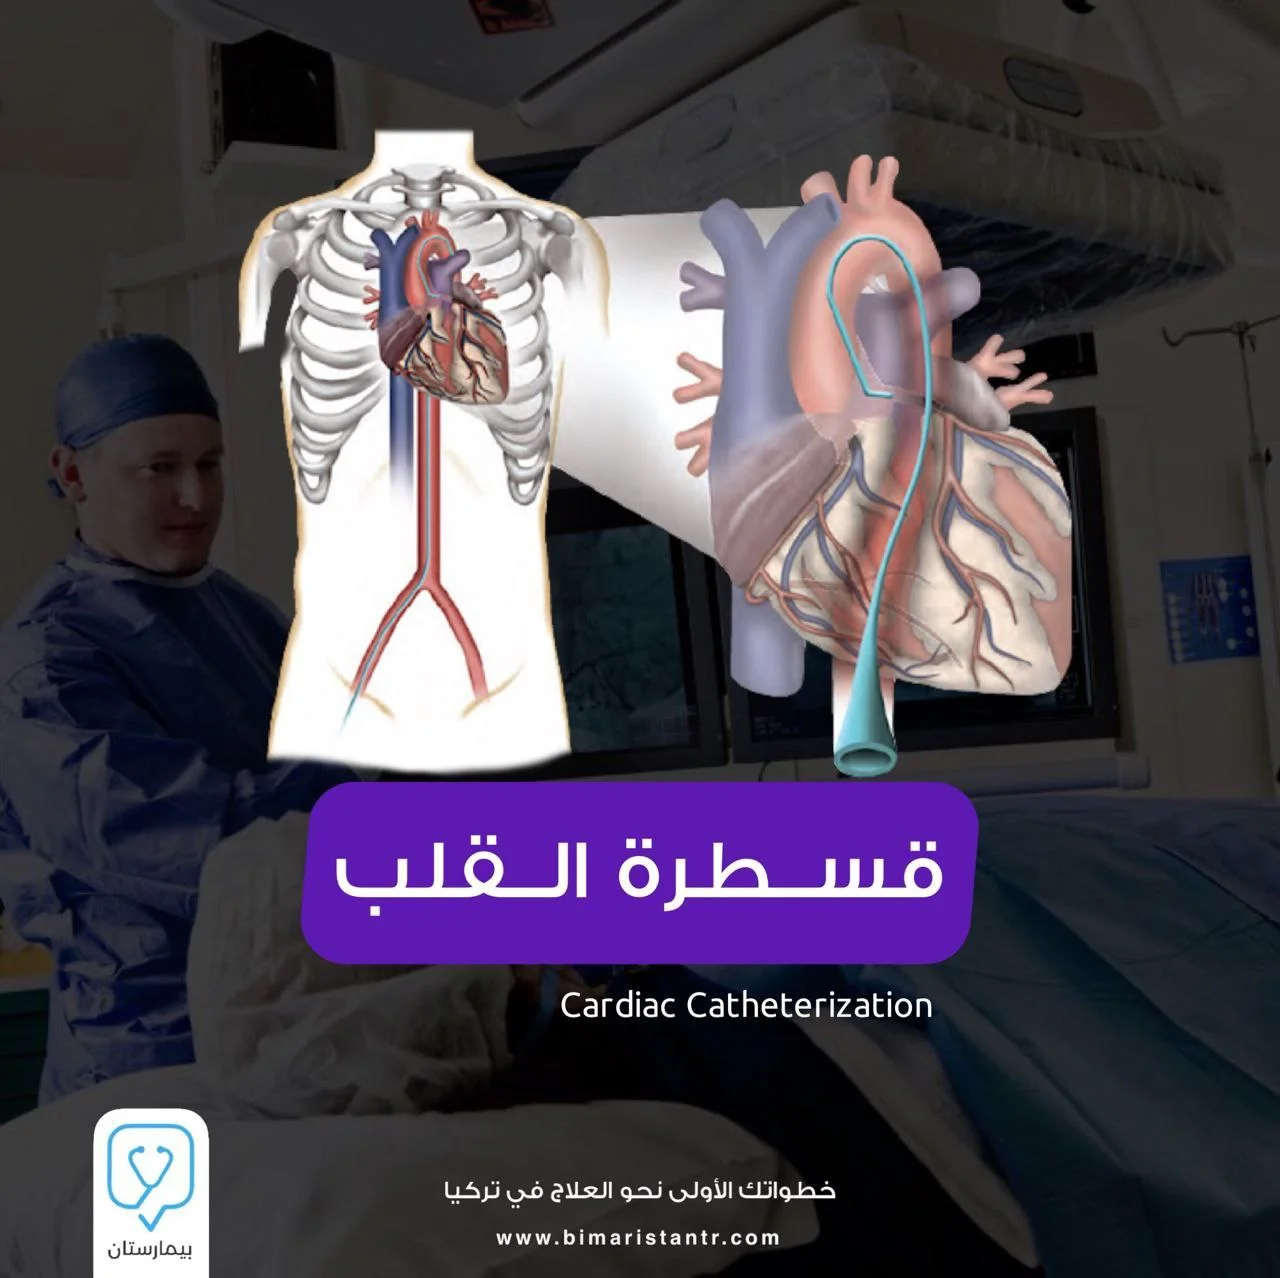 Cardiac-catheterization-procedure-heart-catheterization-in-Turkey